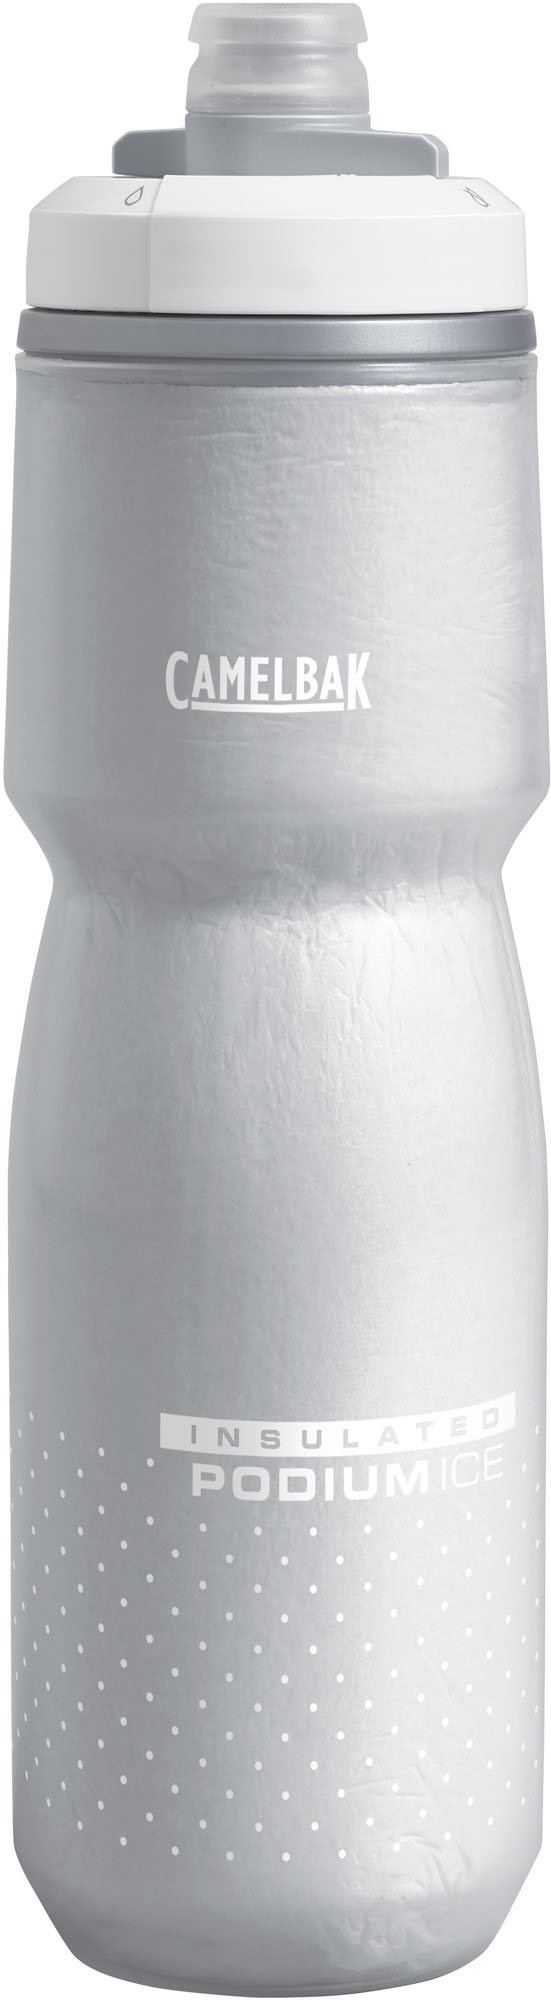 Camelbak Podium Ice 21oz Insulated Water Bottle